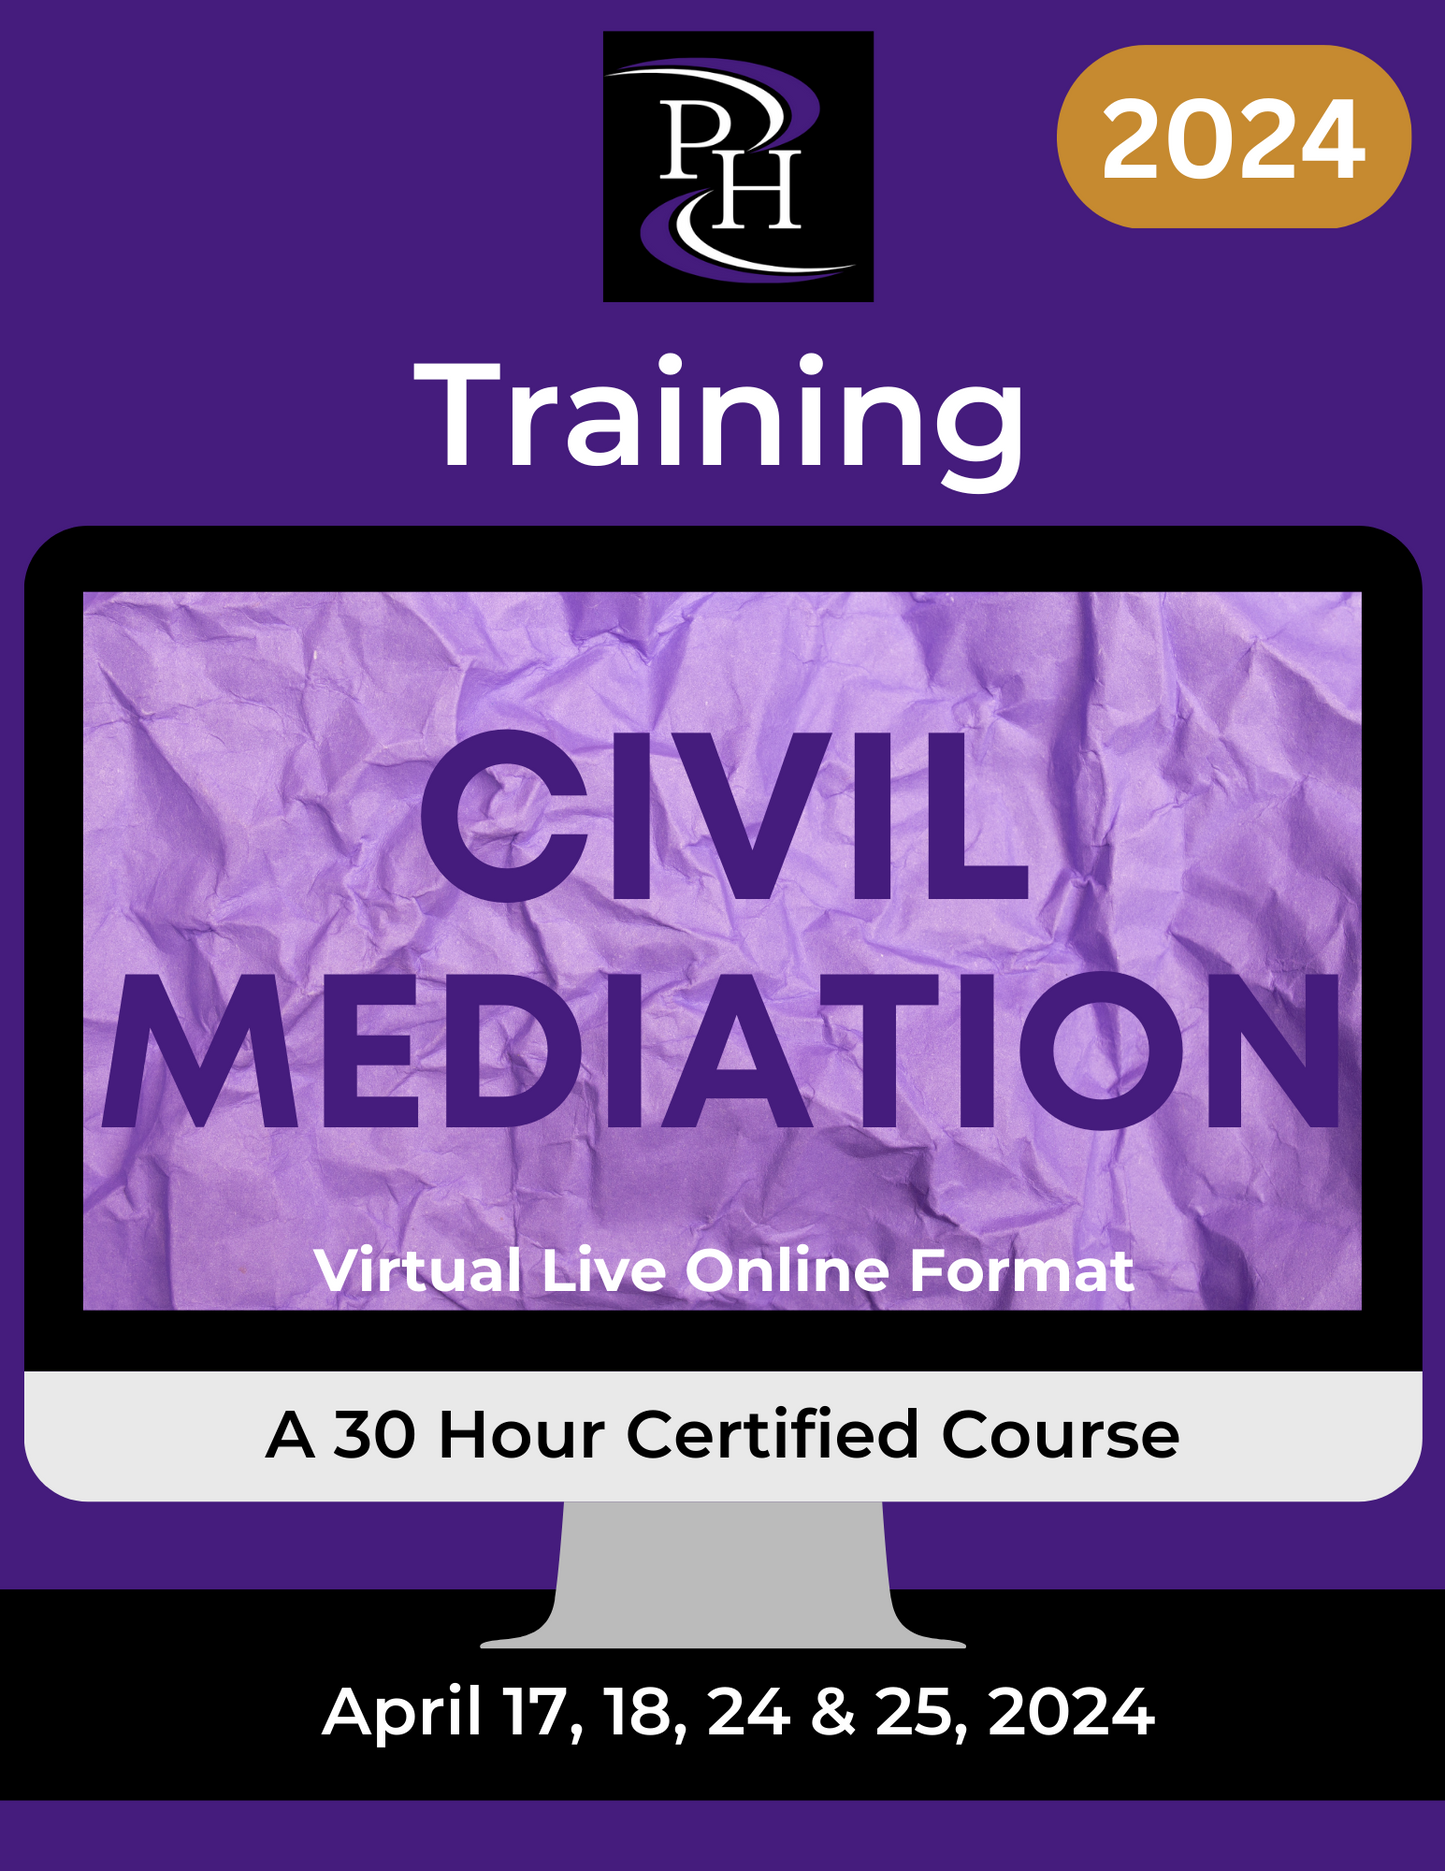 Civil Mediation - Certified Skills Training (April 2024)